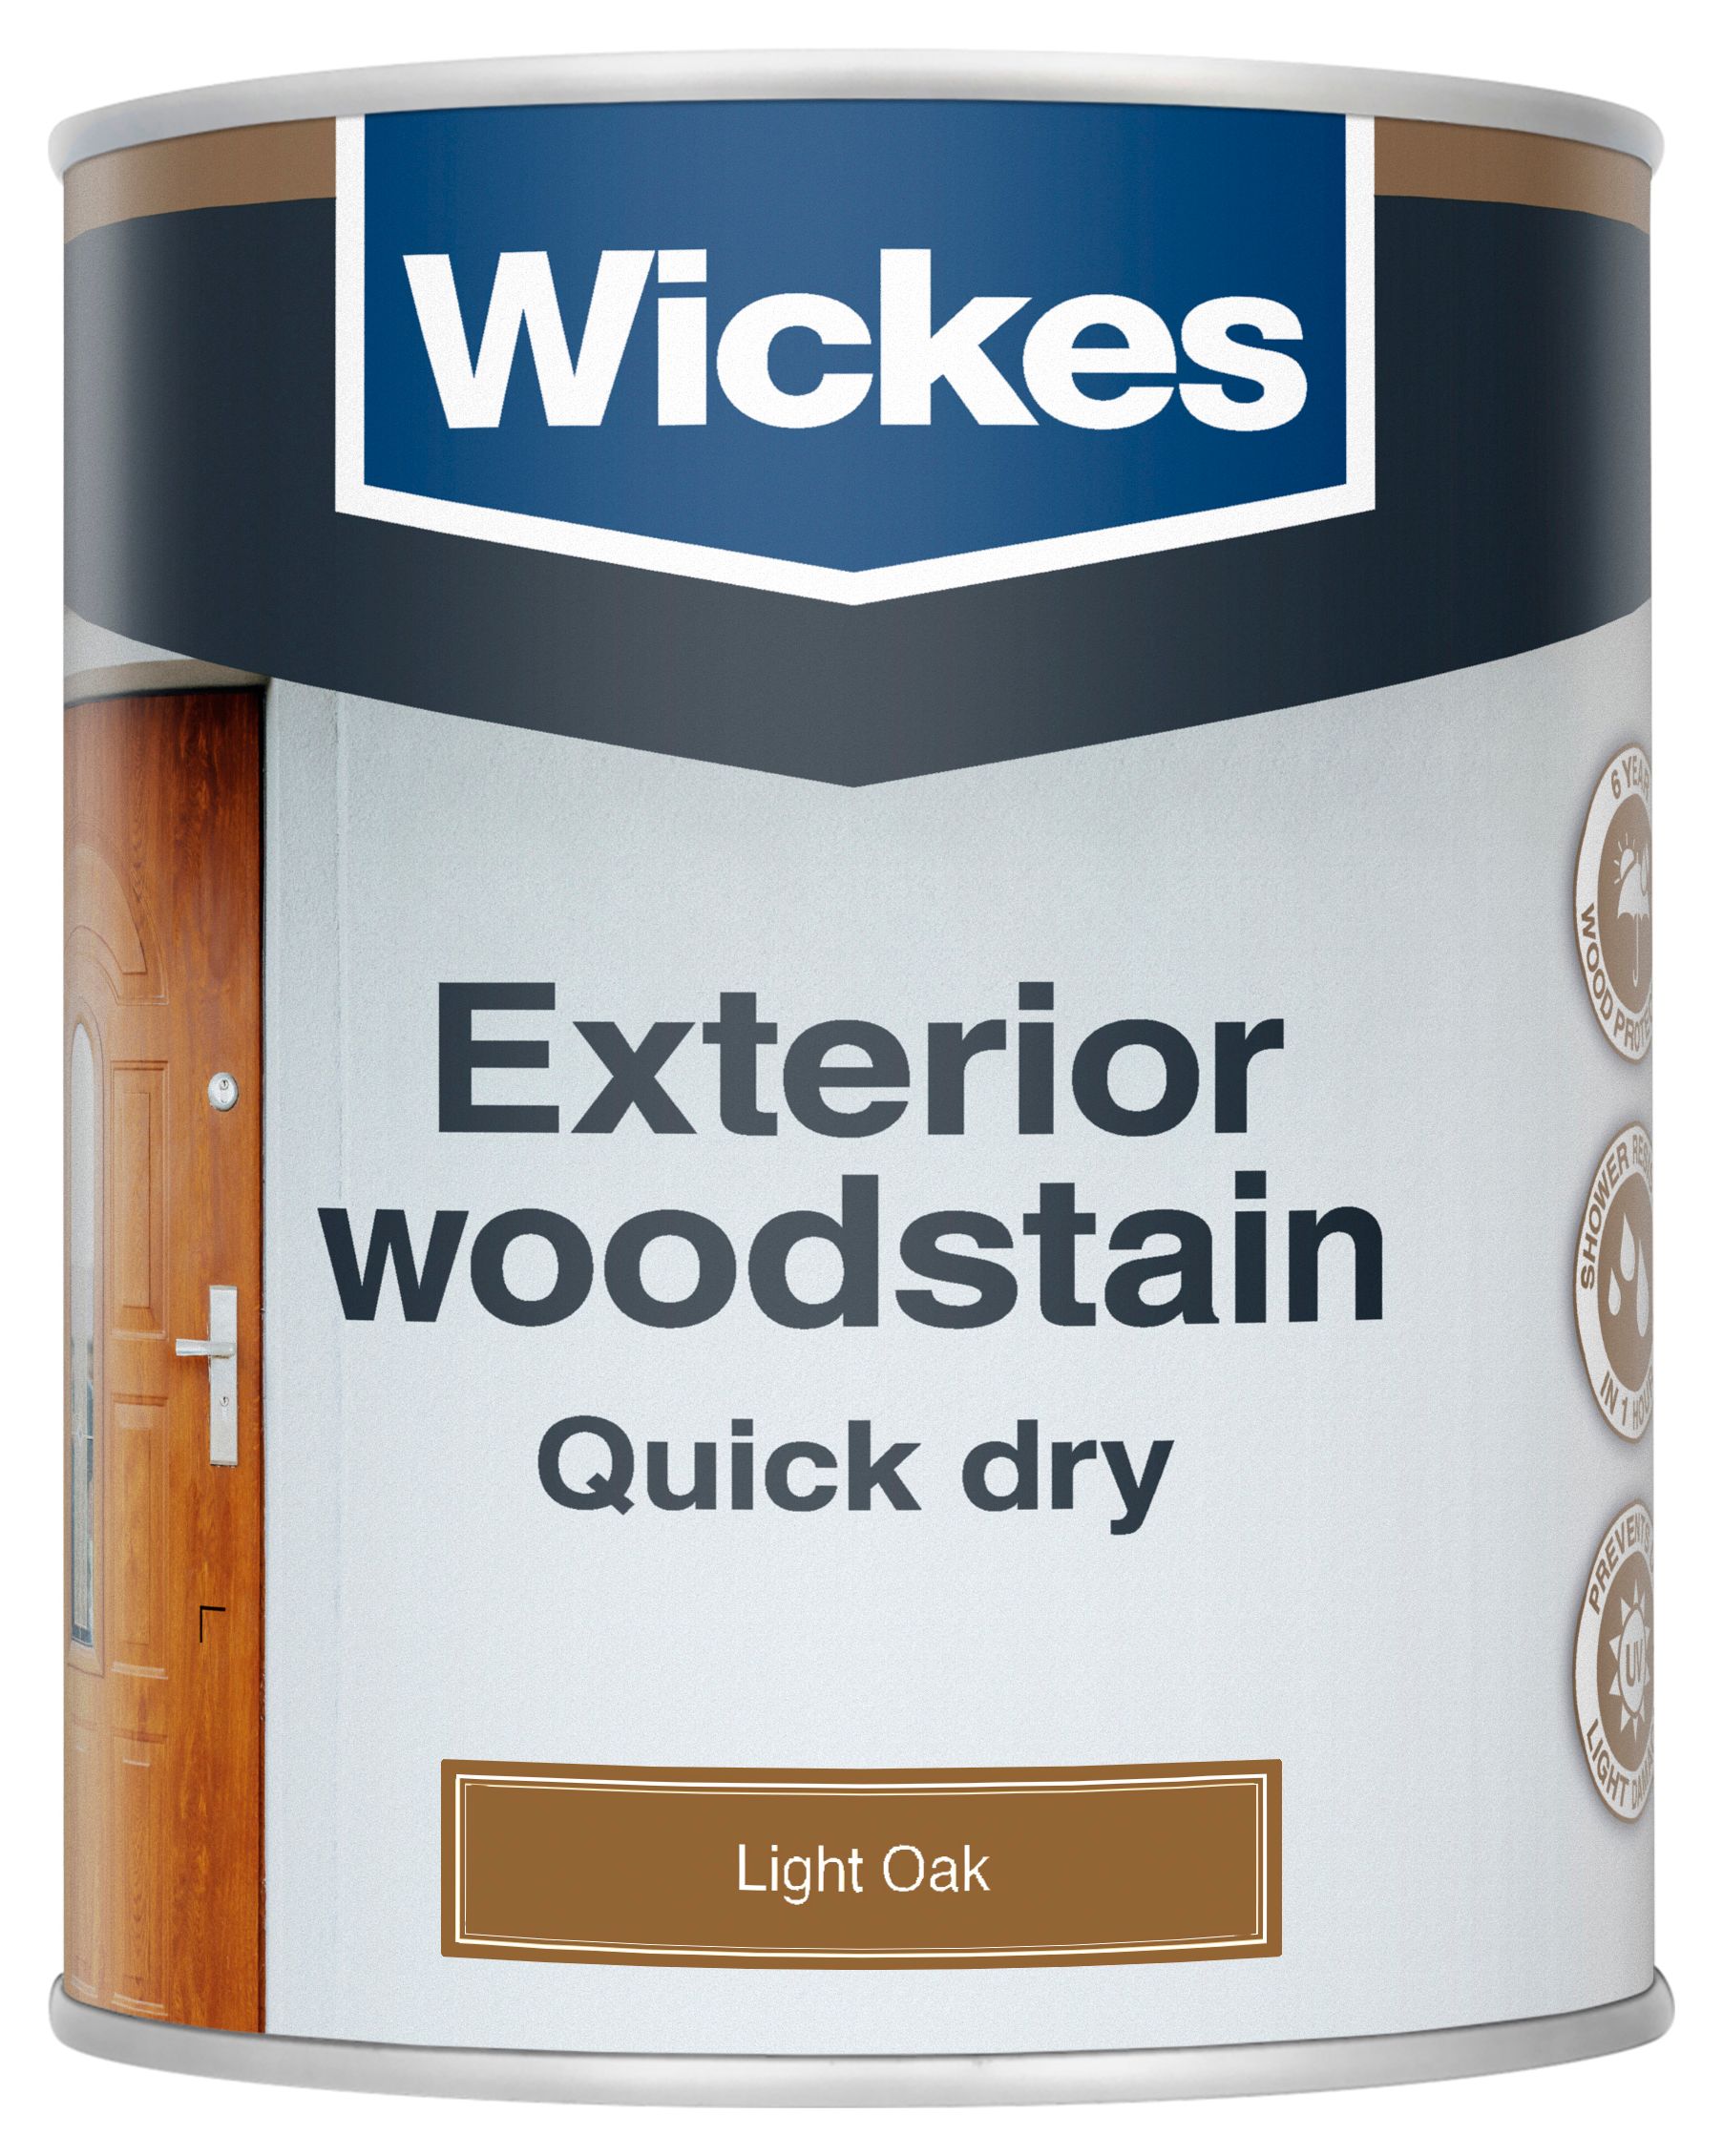 Wickes Exterior Quick Dry Woodstain - Light Oak - 750ml